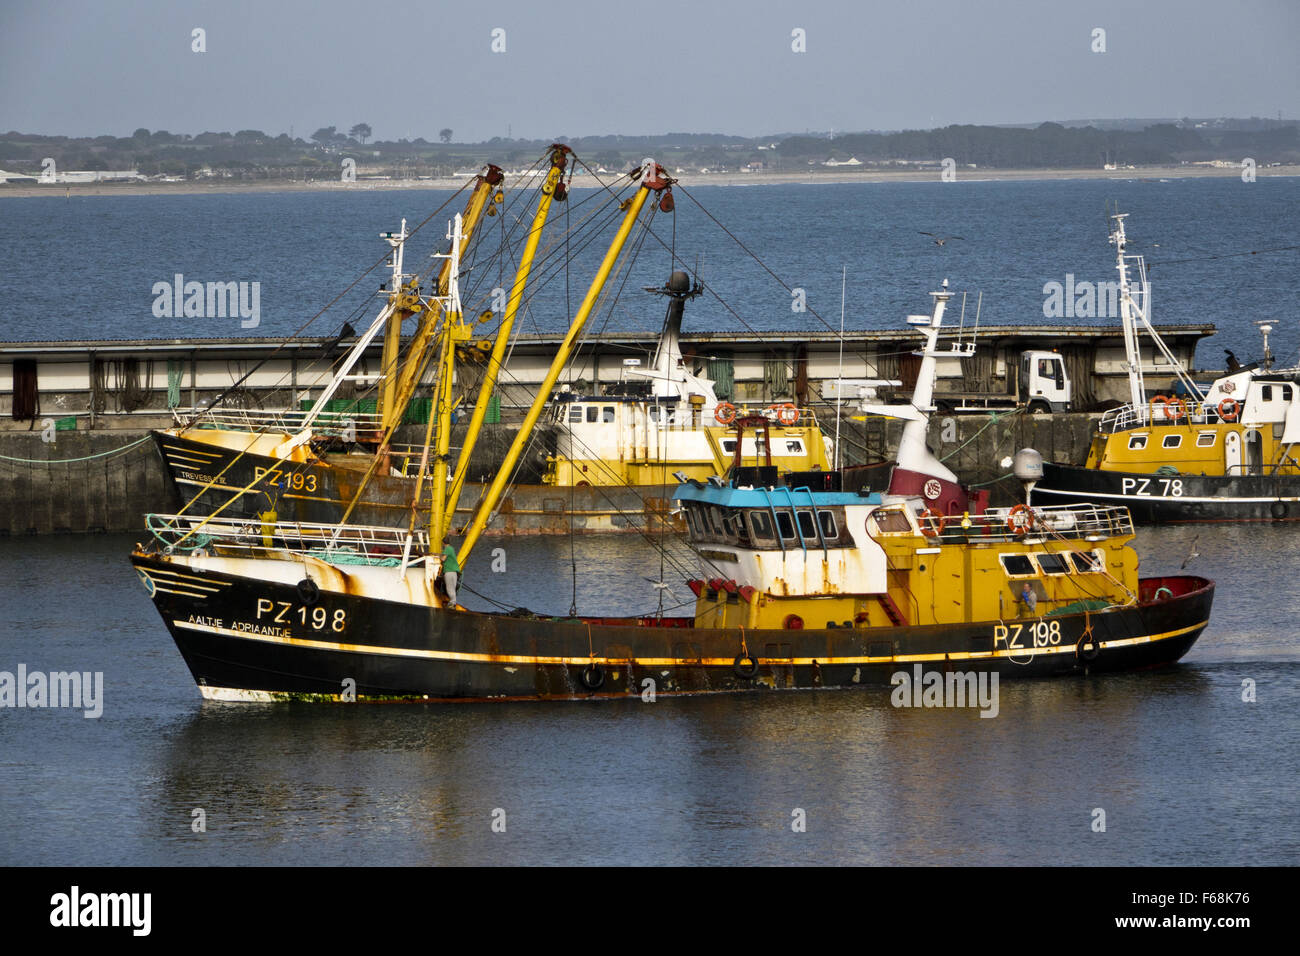 PZ 198 Aaltje Adriaantje Strahl Fischtrawler in Newlyn Harbour Stockfoto